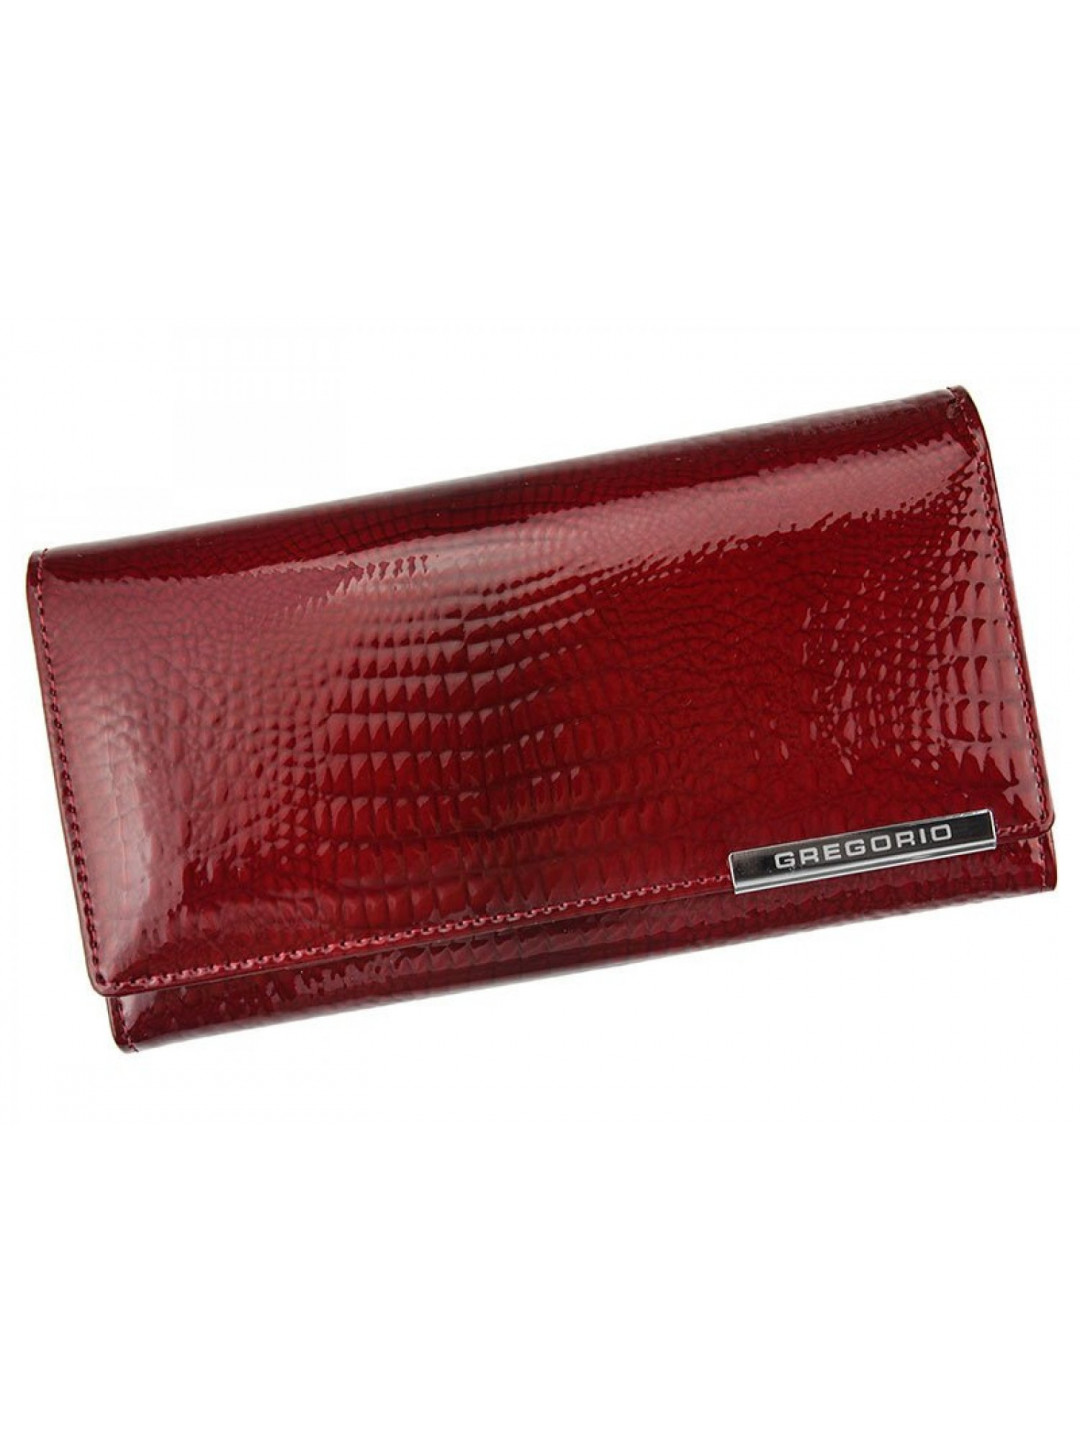 Dámská kožená peněženka červená – Gregorio Margarita